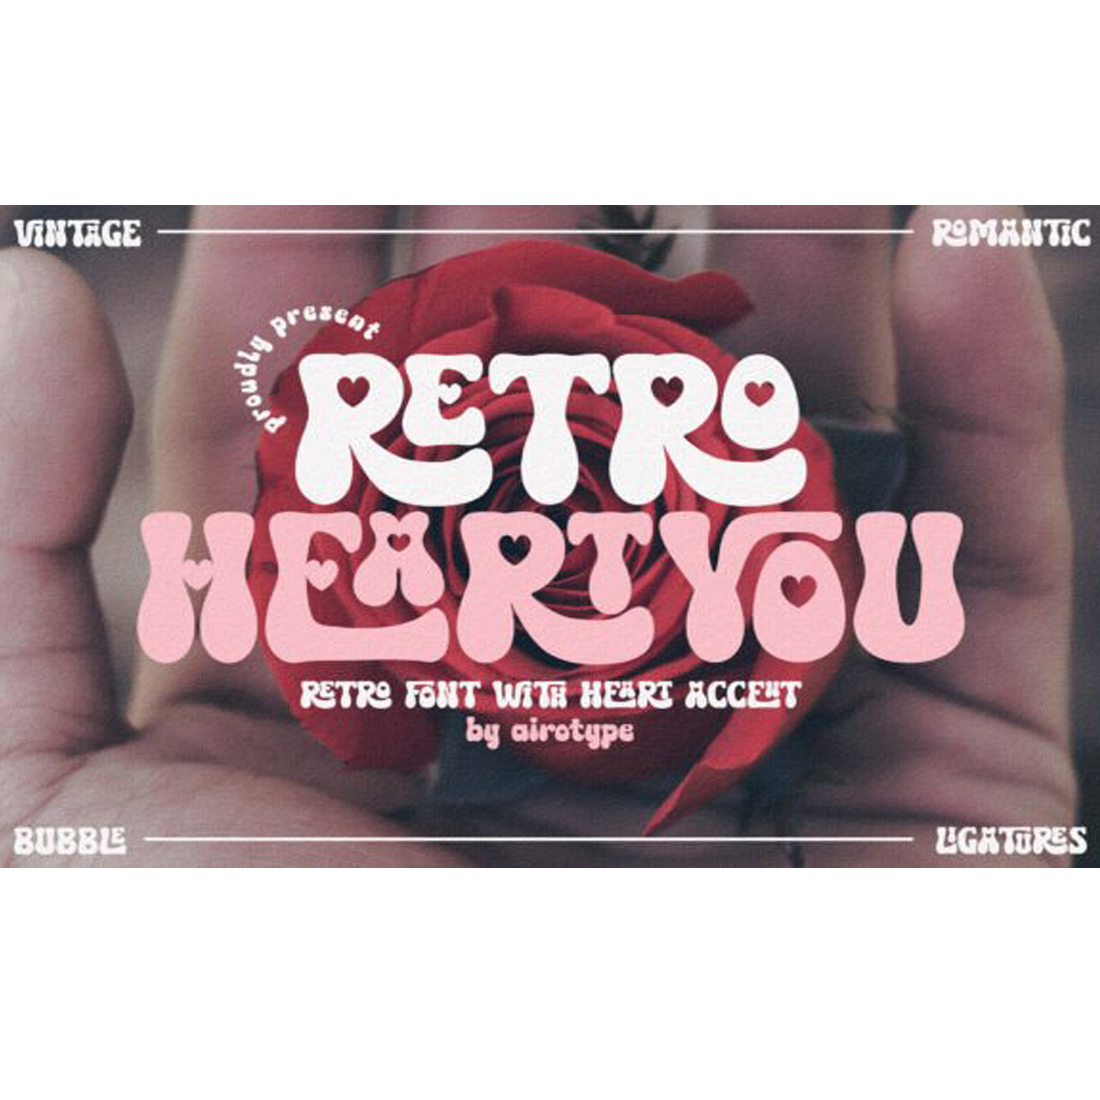 Retro Heart You Font cover image.